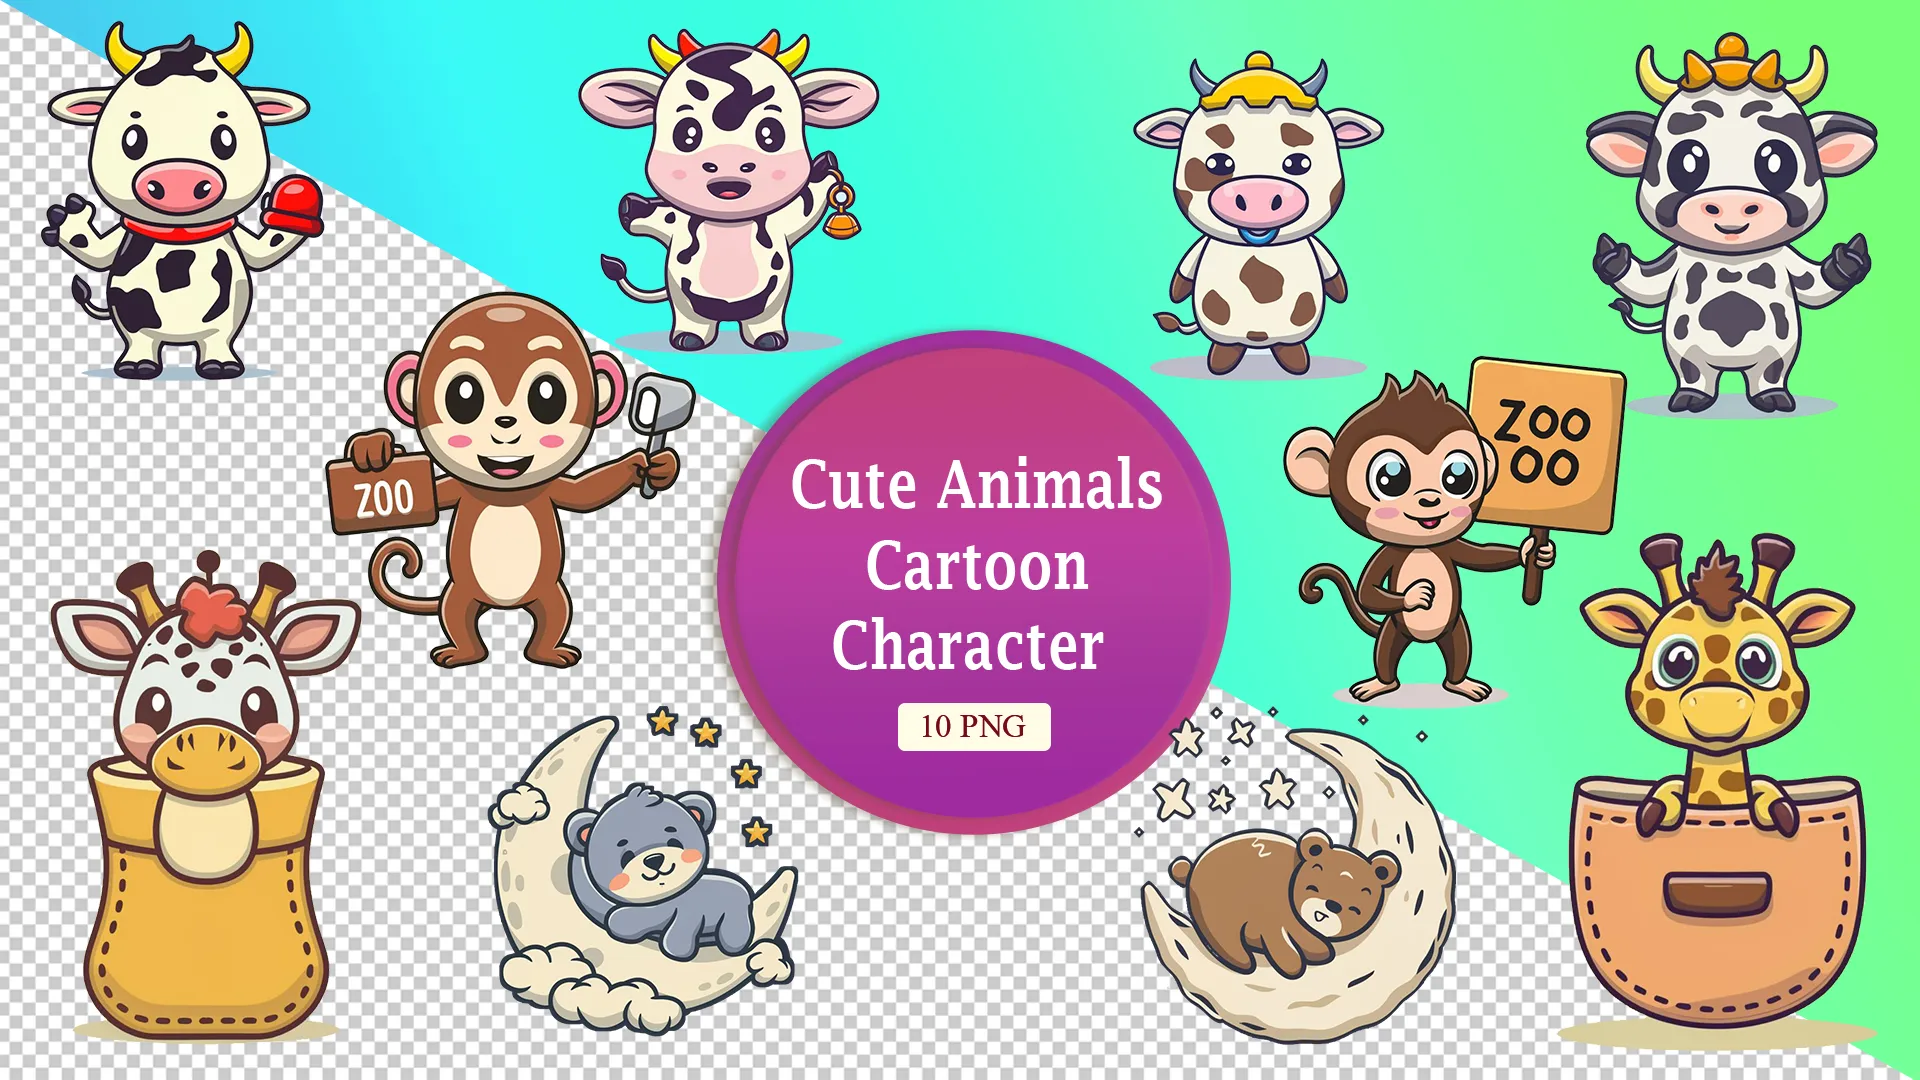 Cute Safari Animals Vector Graphic Pack image